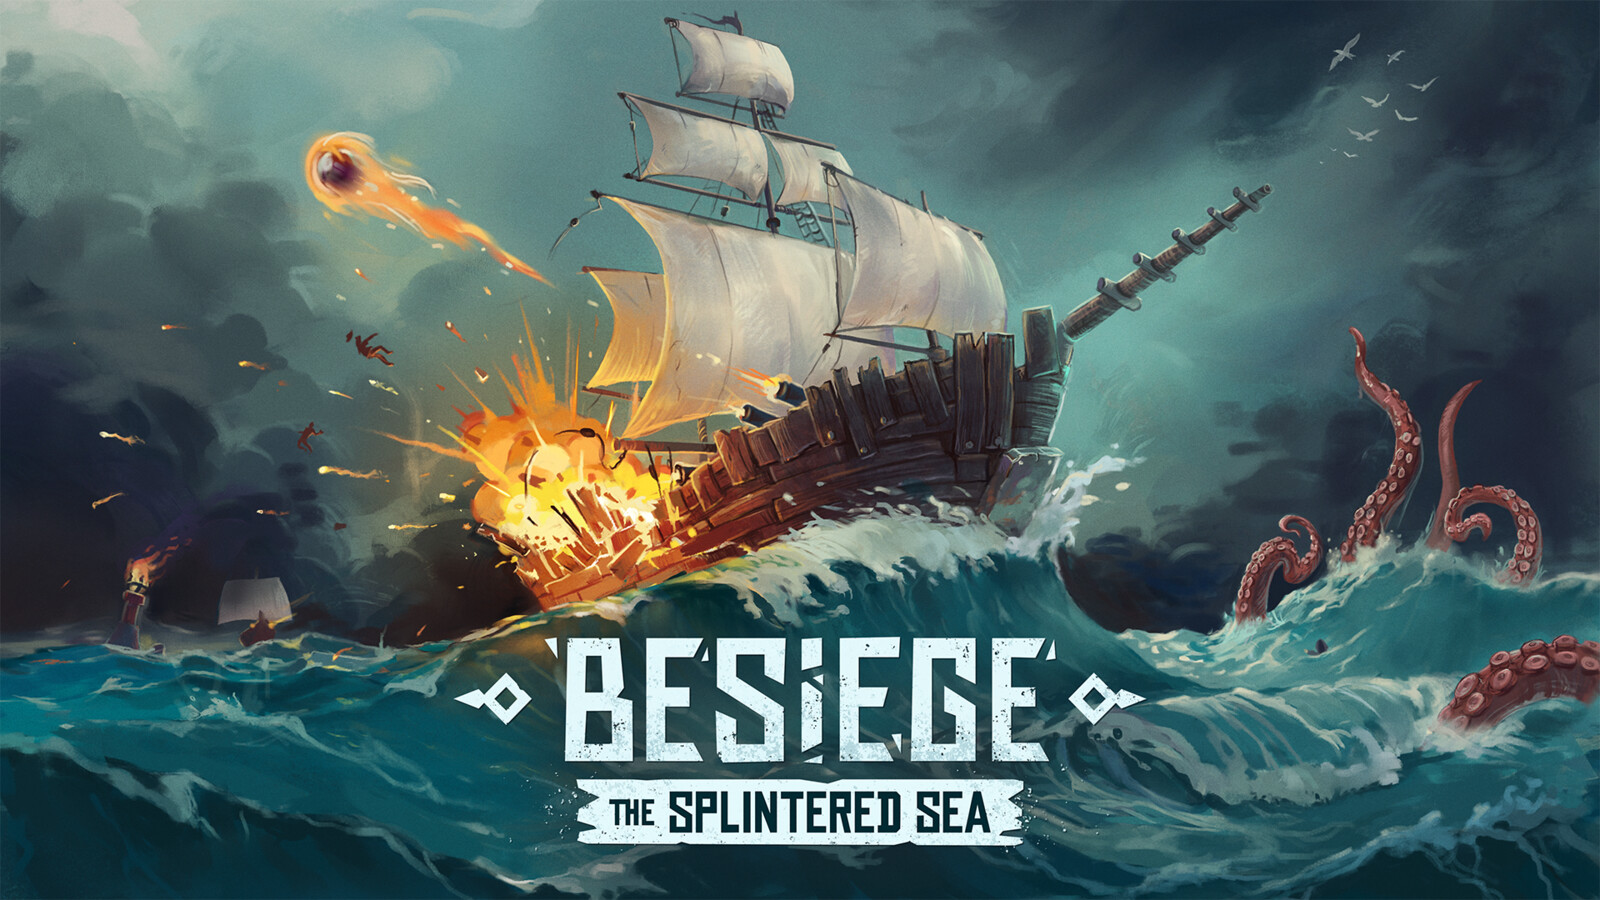 Besiege - the Splintered Sea cover art